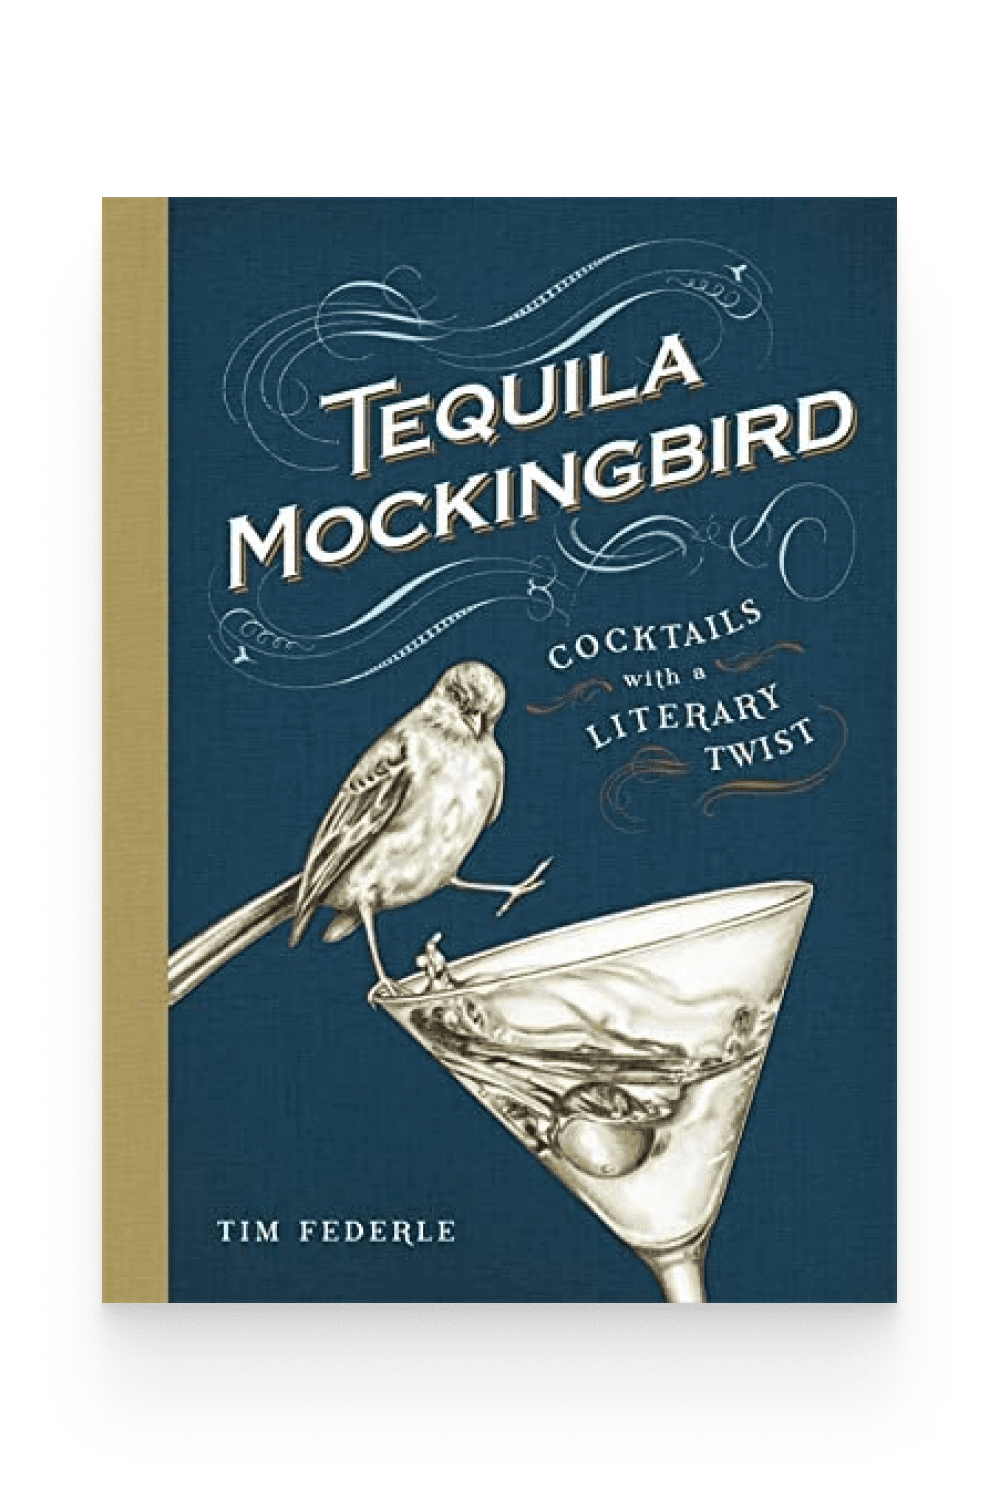 The book Tequila Mockingbird.